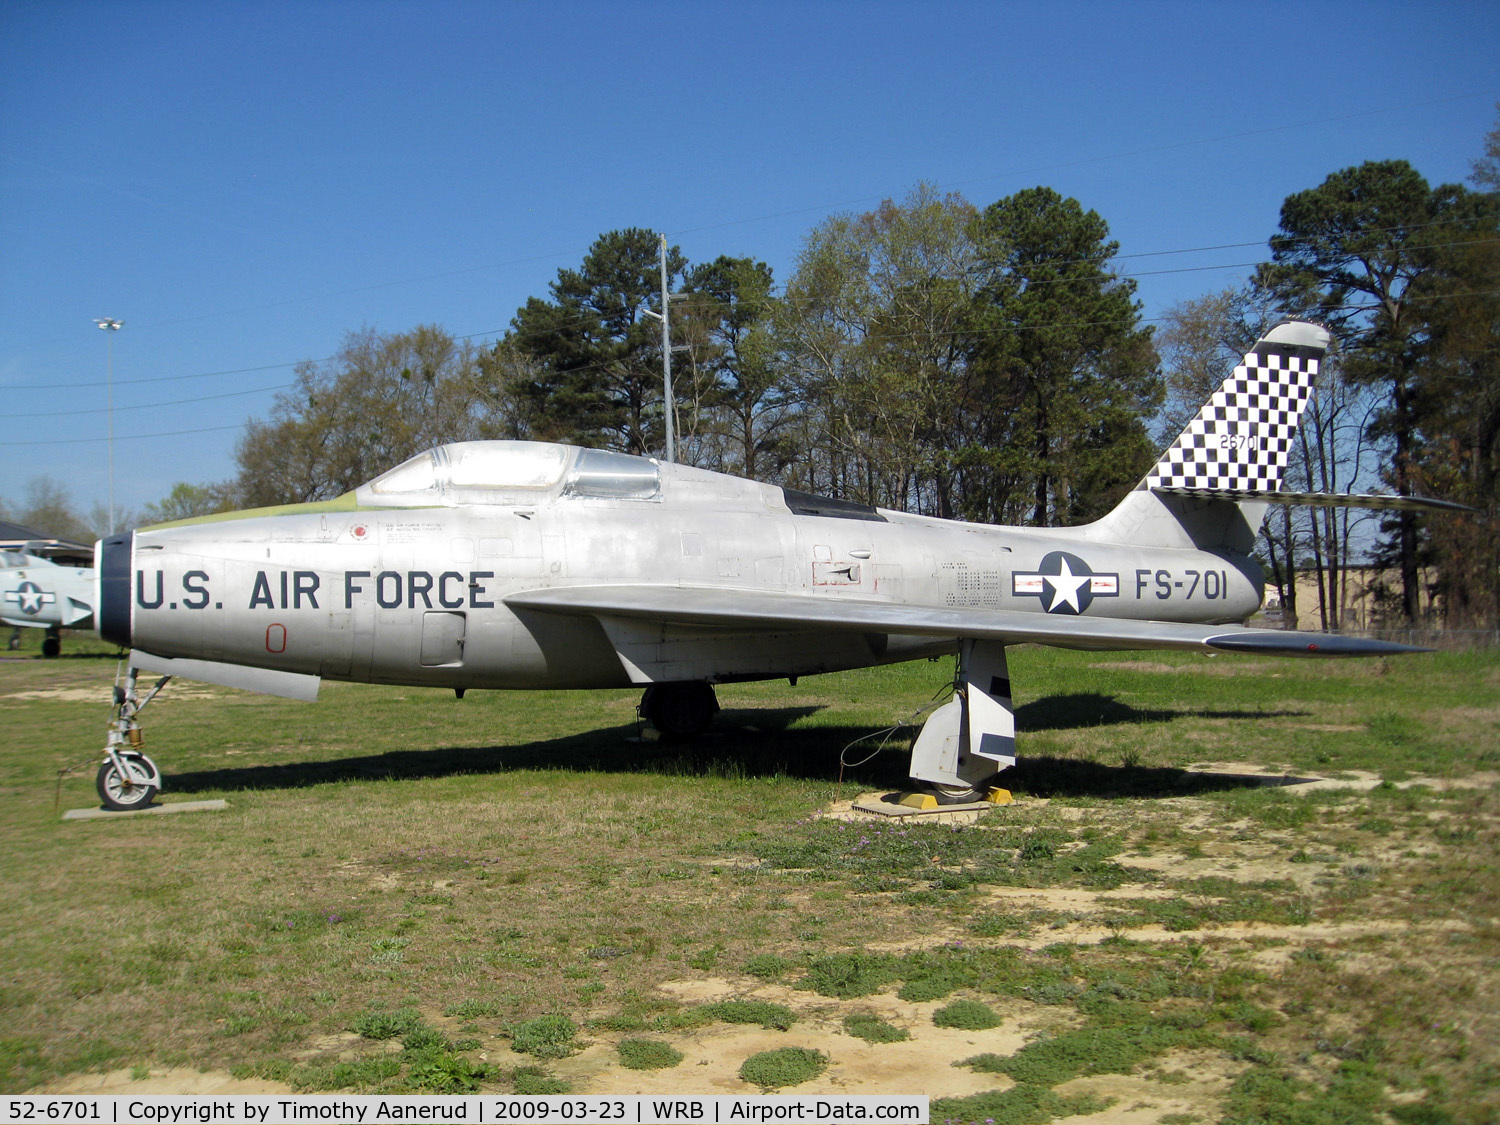 52-6701, 1952 Republic F-84F Thunderstreak C/N Not found 52-6701, Museum of Aviation, Robins AFB